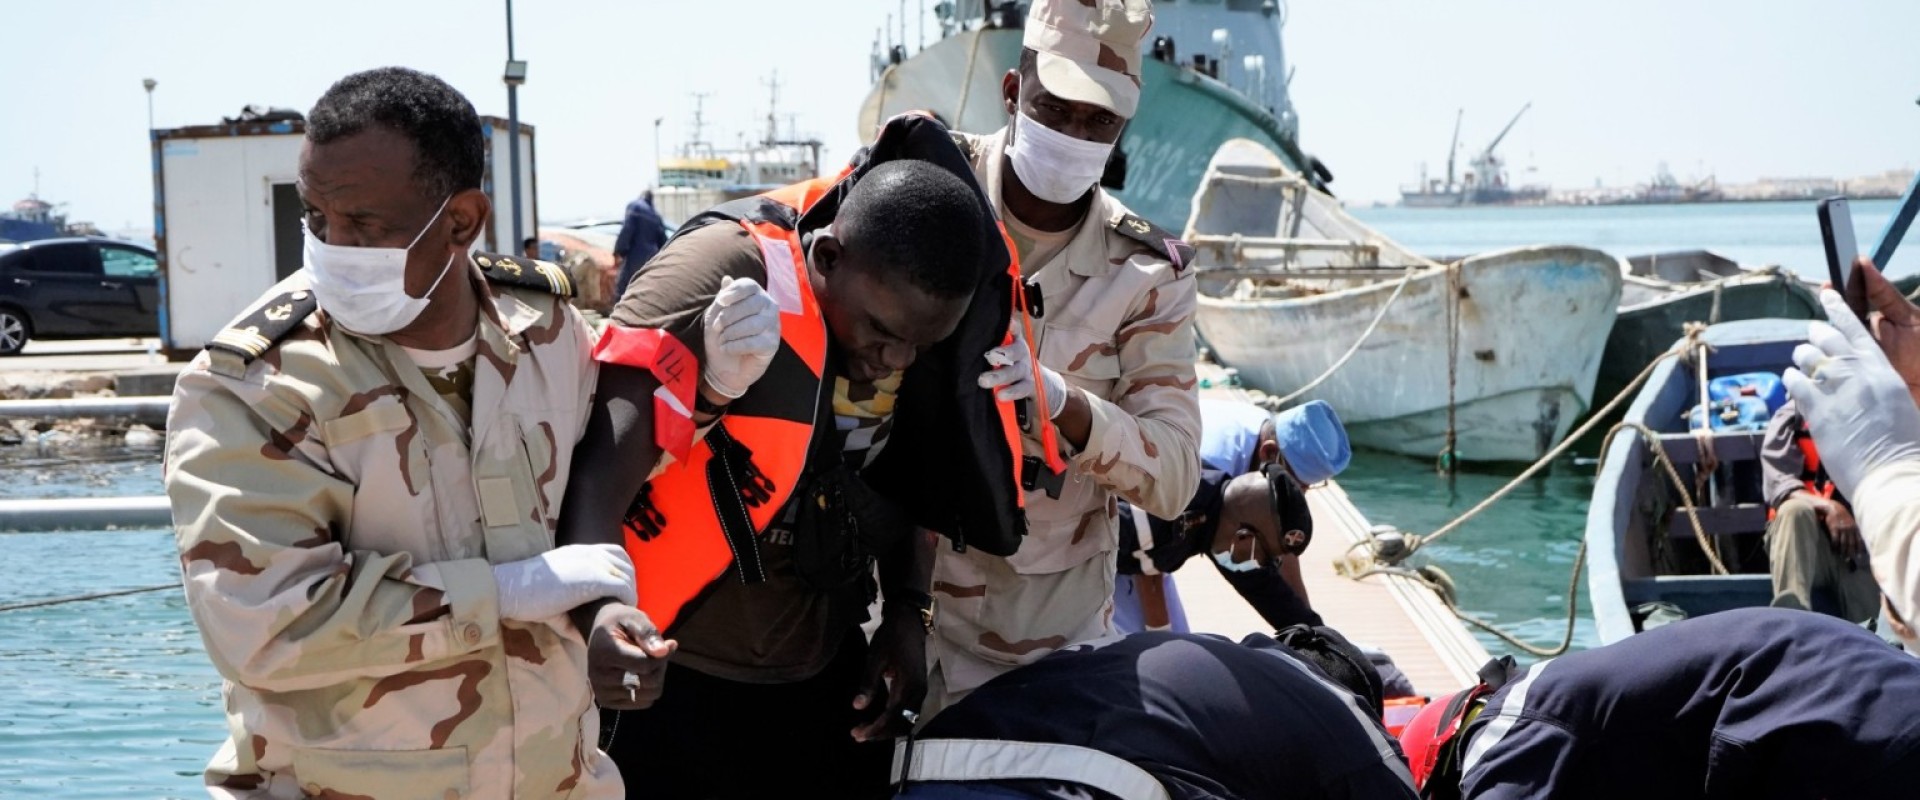 Mauritanian Coast Guard and Civil Protection officers assist migrants intercepted at sea/IOM Mauritania